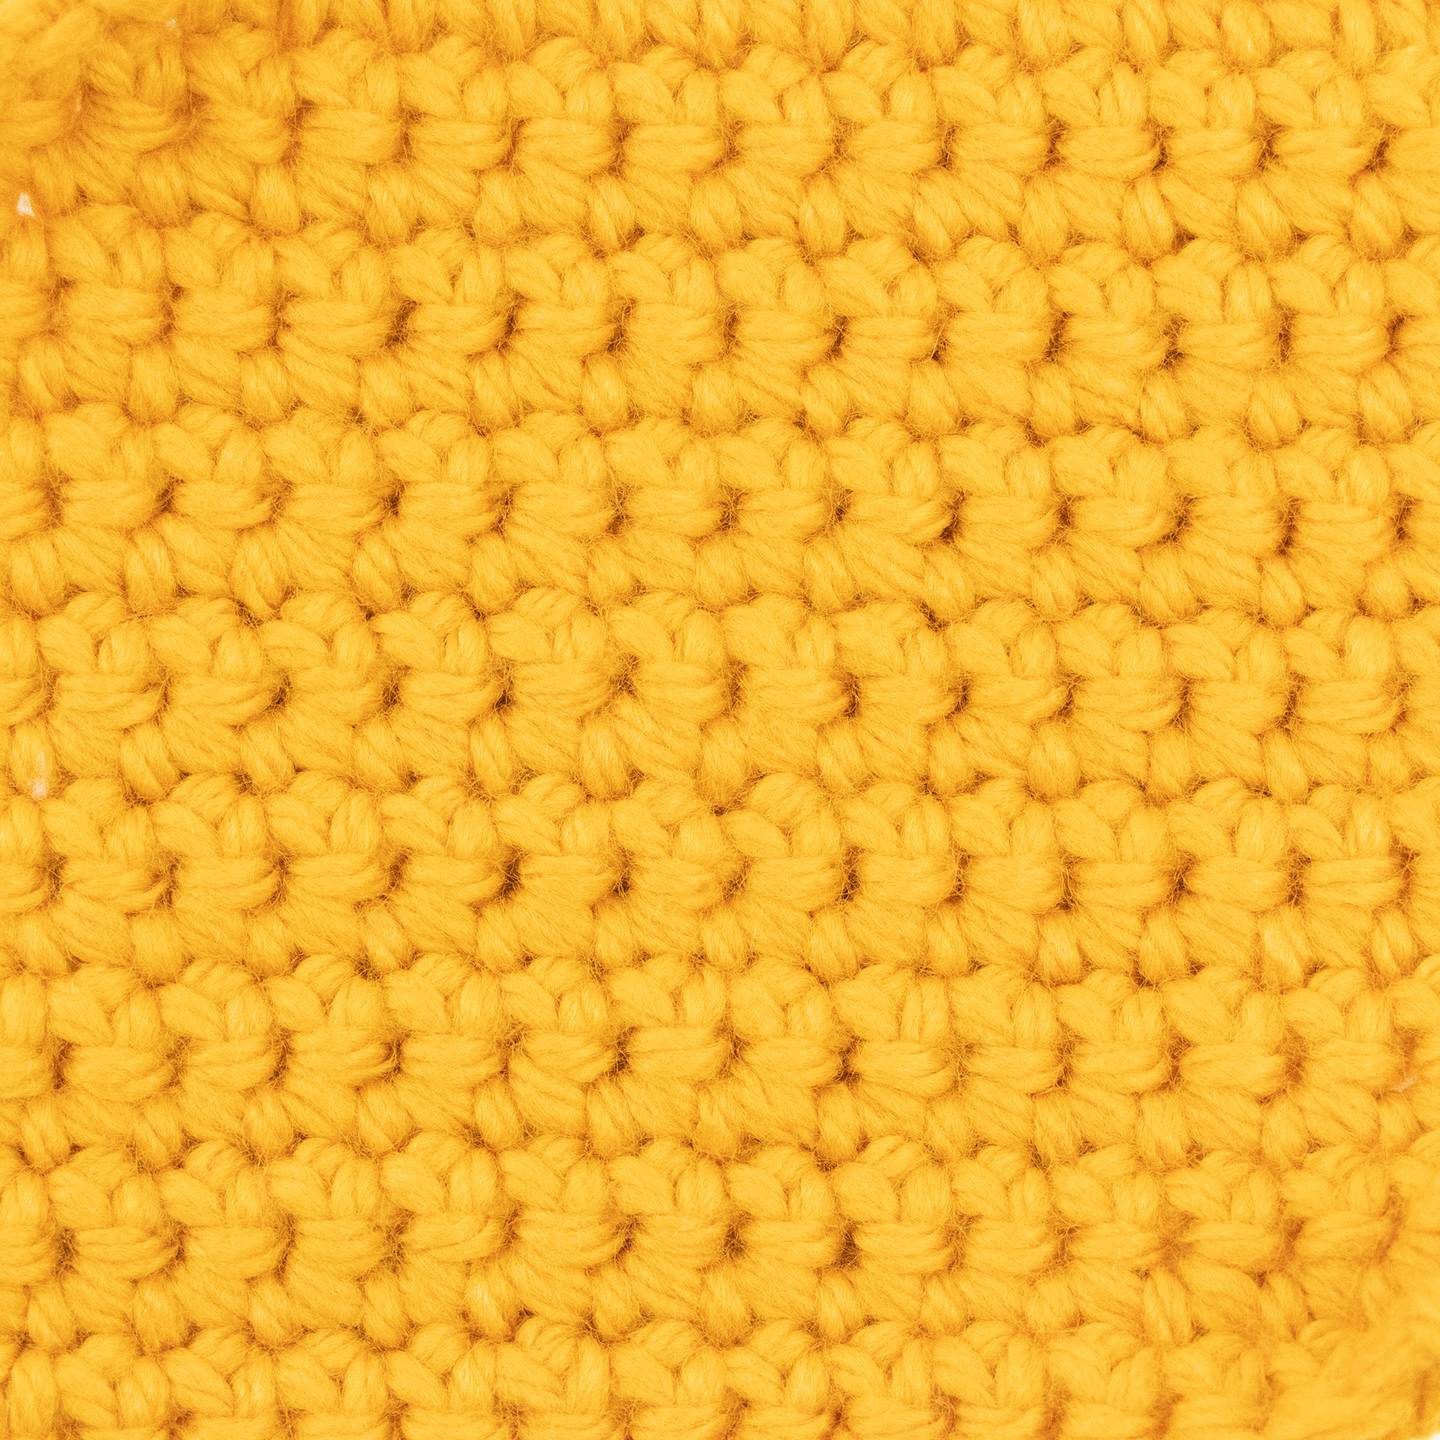 US size P/Q (15mm) Bamboo Crochet Hook